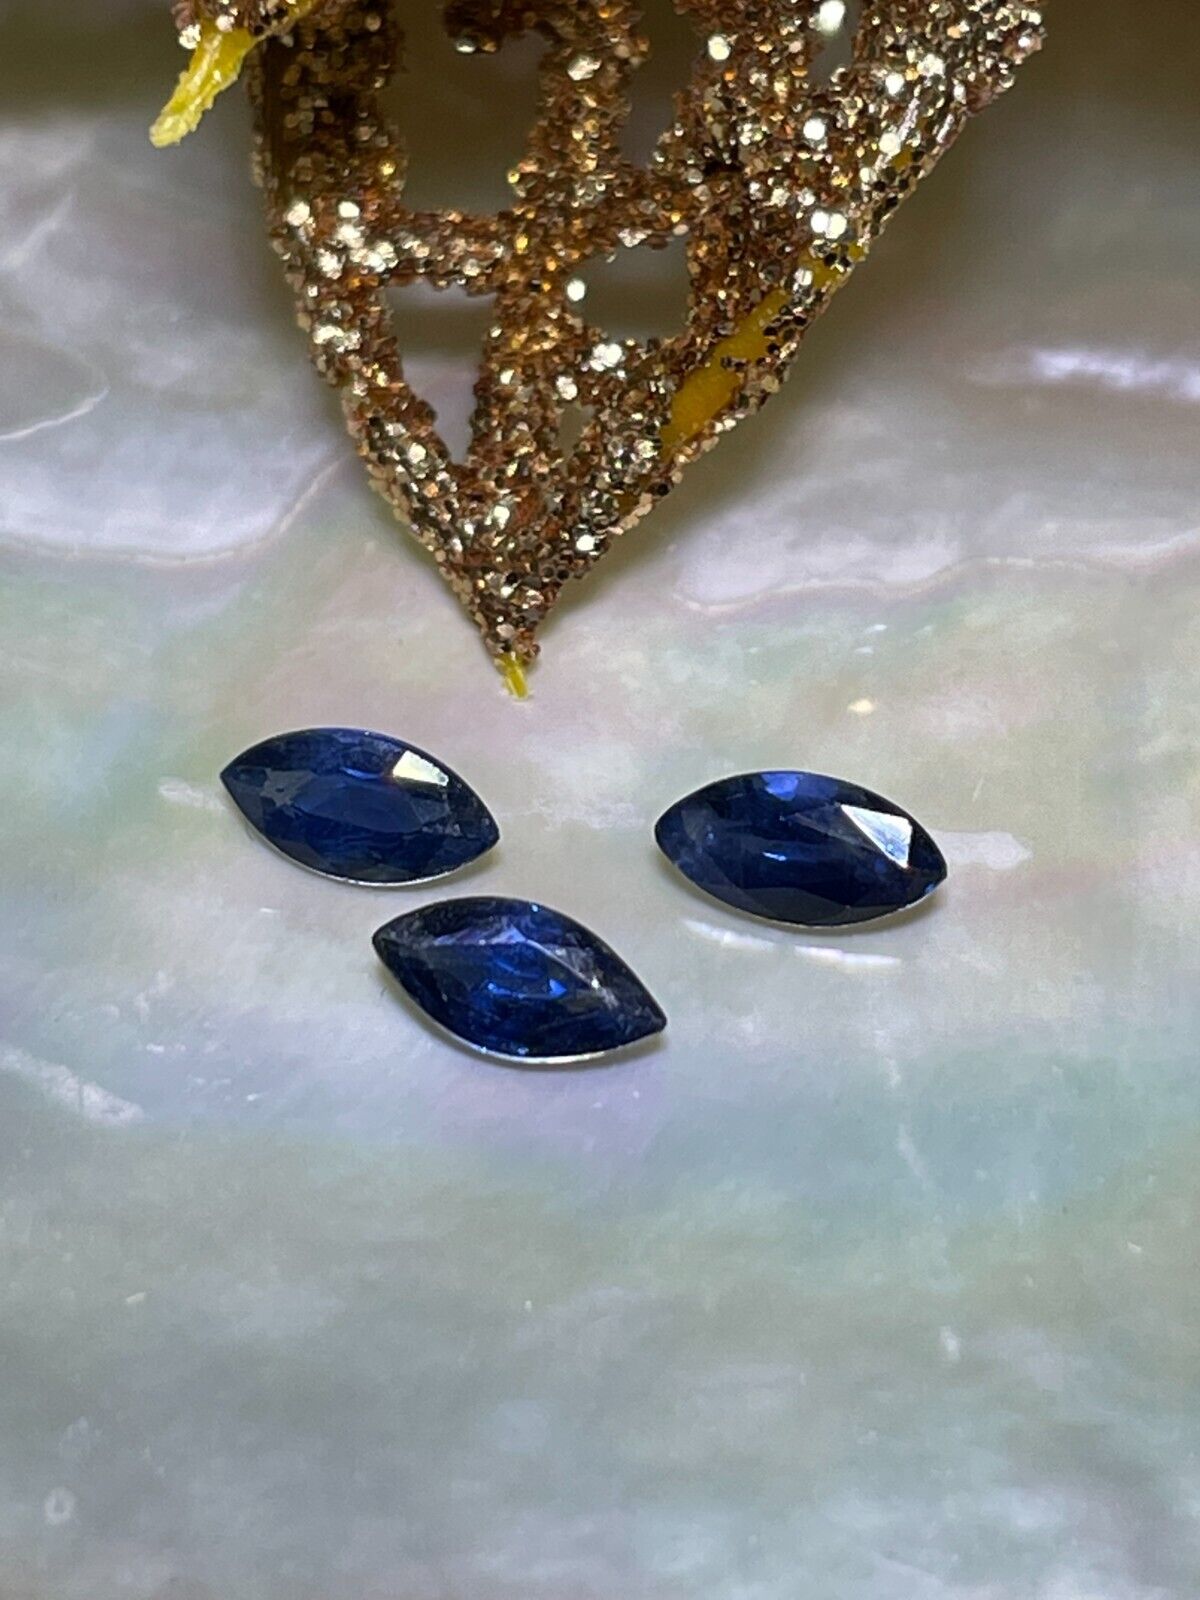 Loose A+ Grade Natural Blue Sapphire Gemstones Marquise Cut 1.09ctw Без бренда - фотография #7